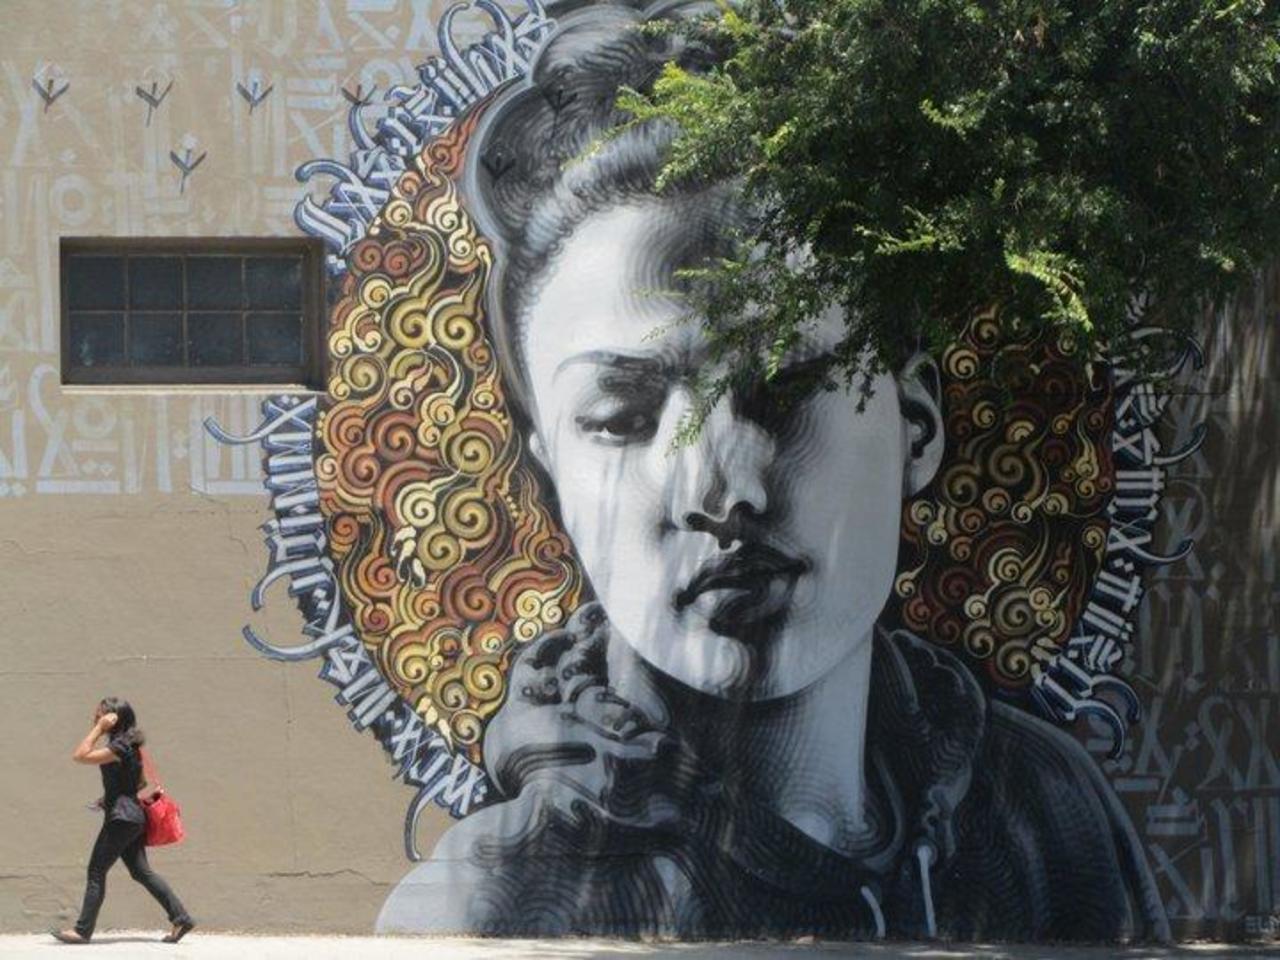 RT @DanielGennaoui: Truly beautiful work. Check out more amazing art in our gallery: http://bit.ly/1uRmVhJ #streetart #graffiti http://t.co/SbaLvnwaJC